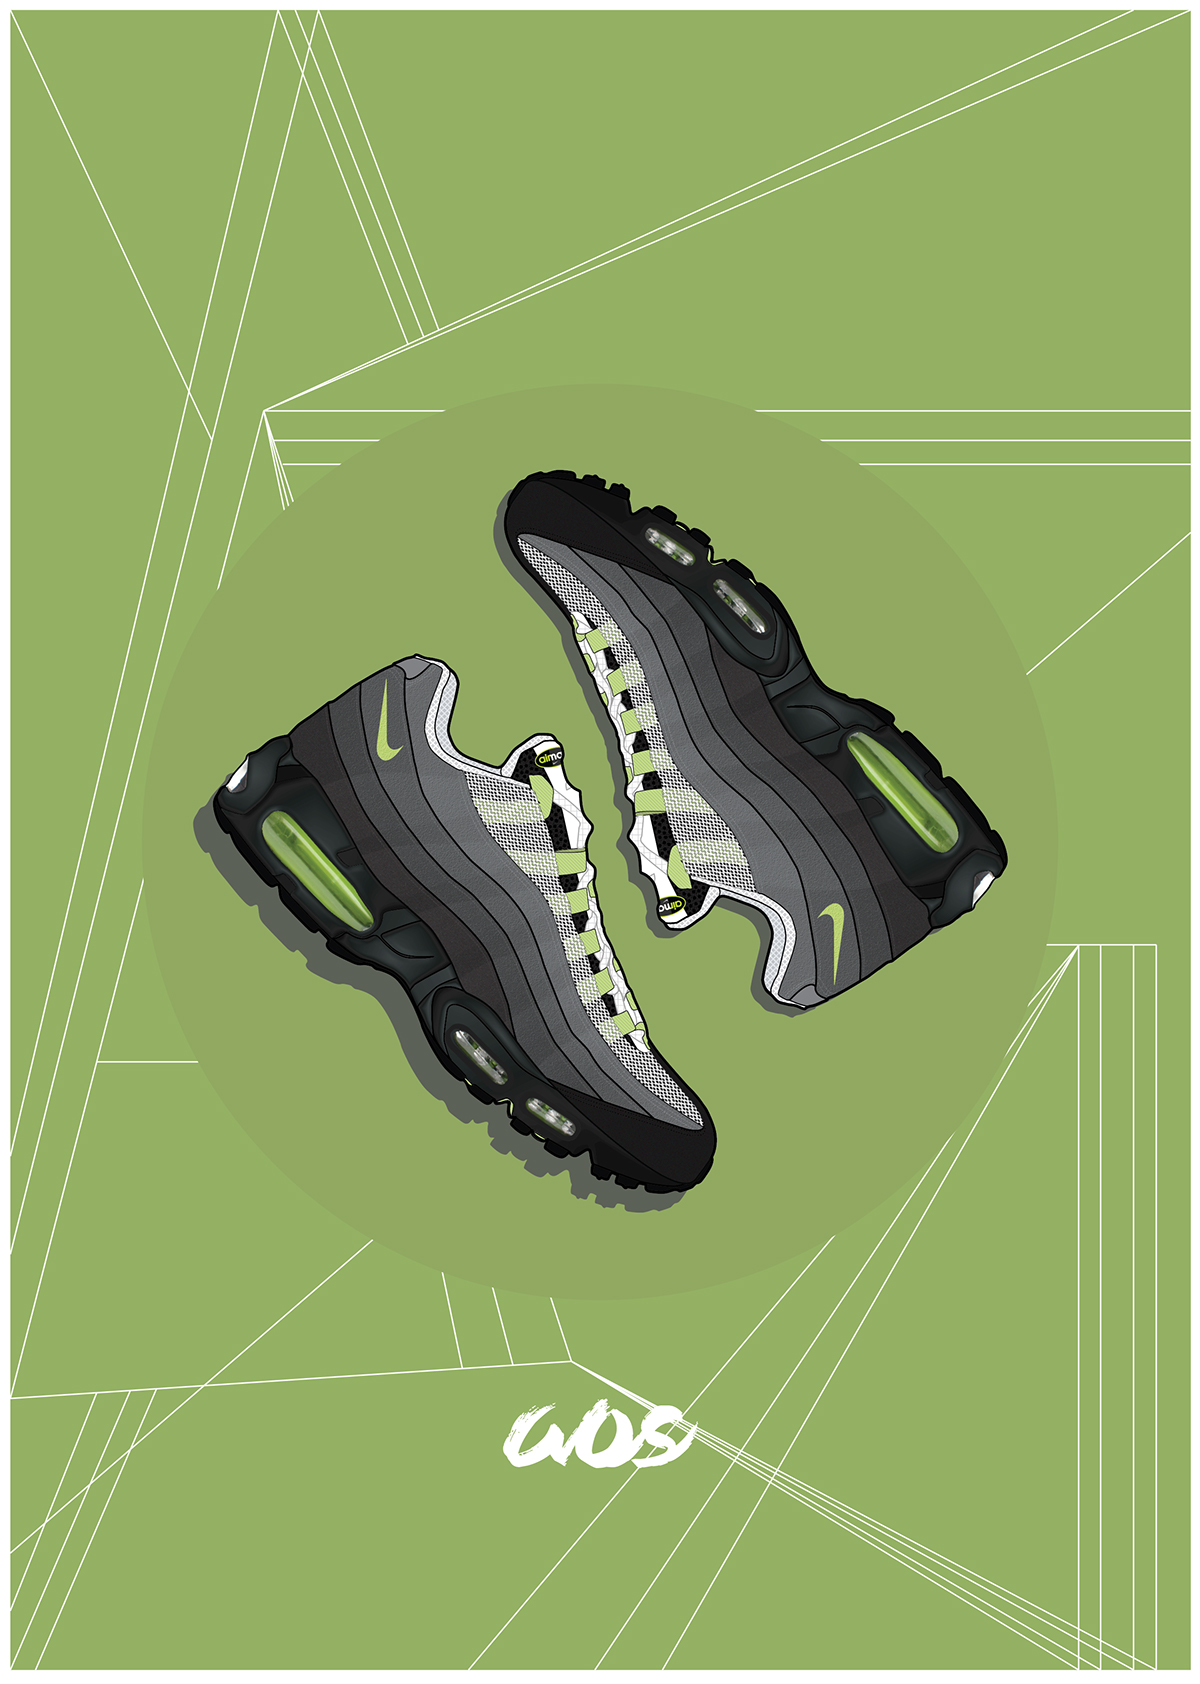 Adobe Portfolio sneaker design poster Nike air max footwear graphic ILLUSTRATION 